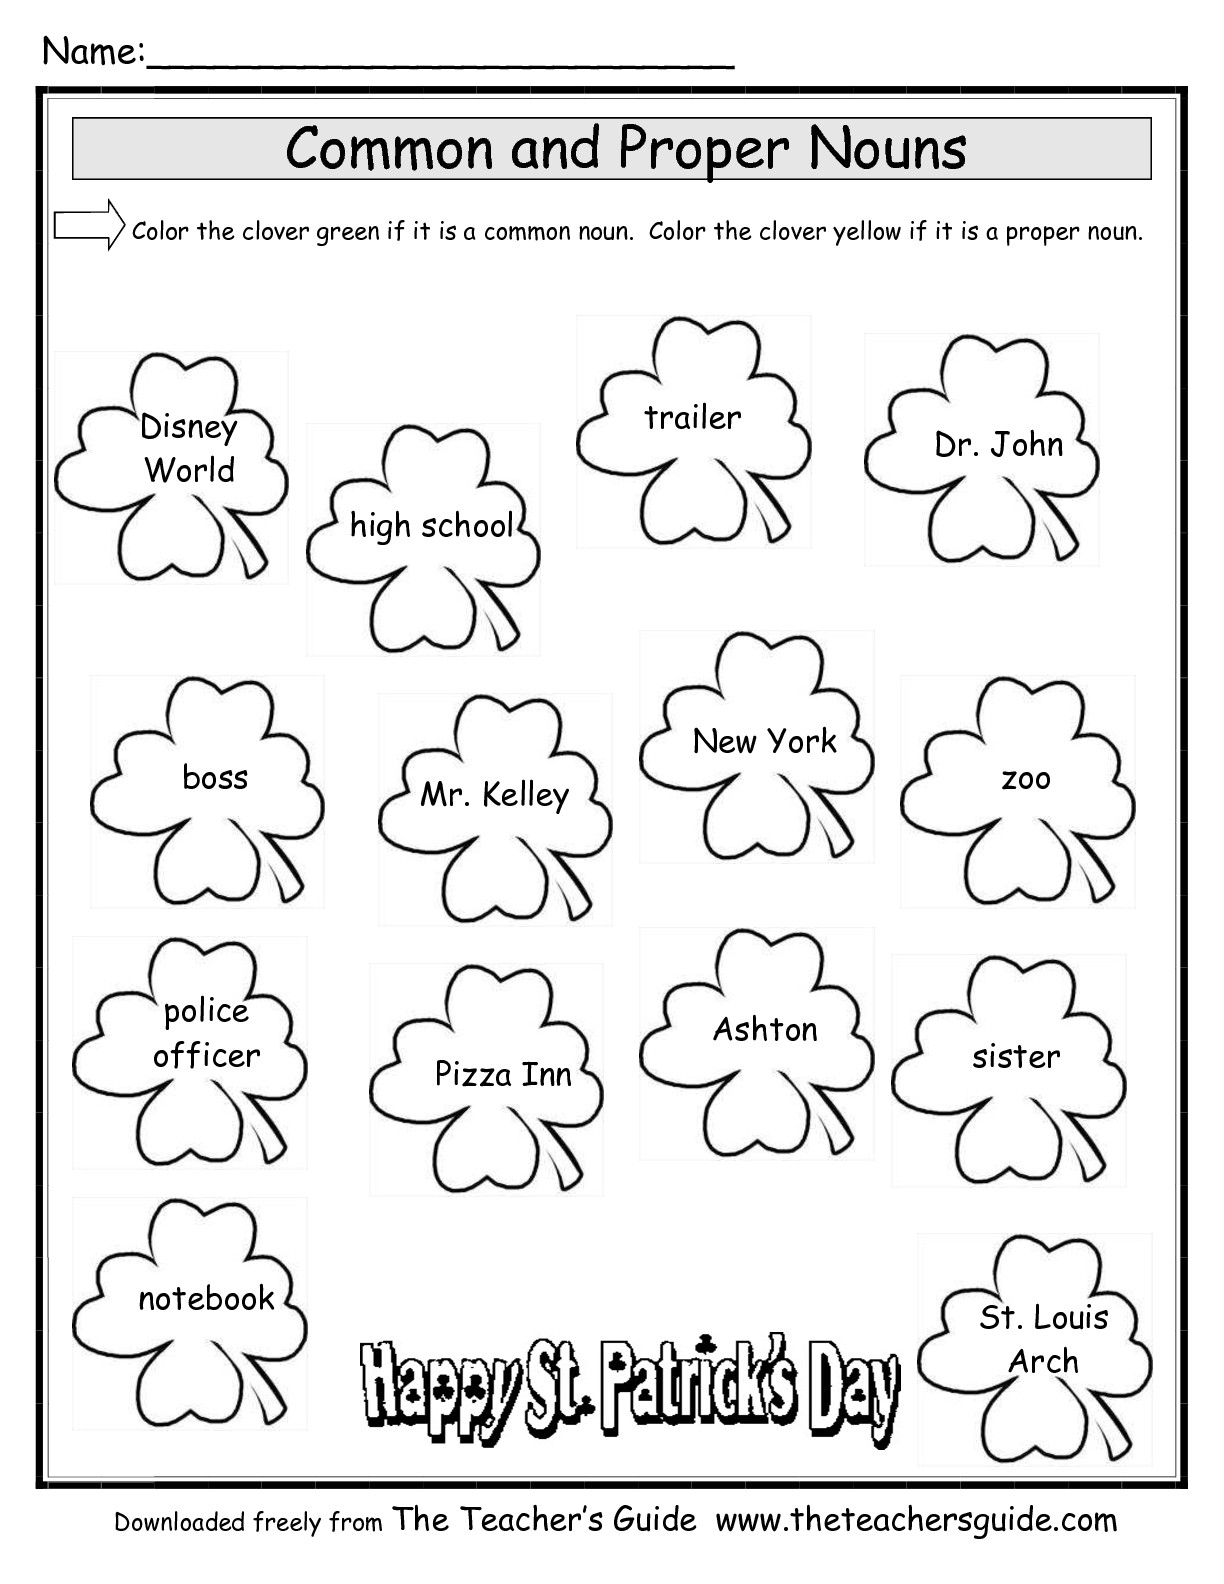 15 Best Images of Noun Worksheets For Kindergarten ...